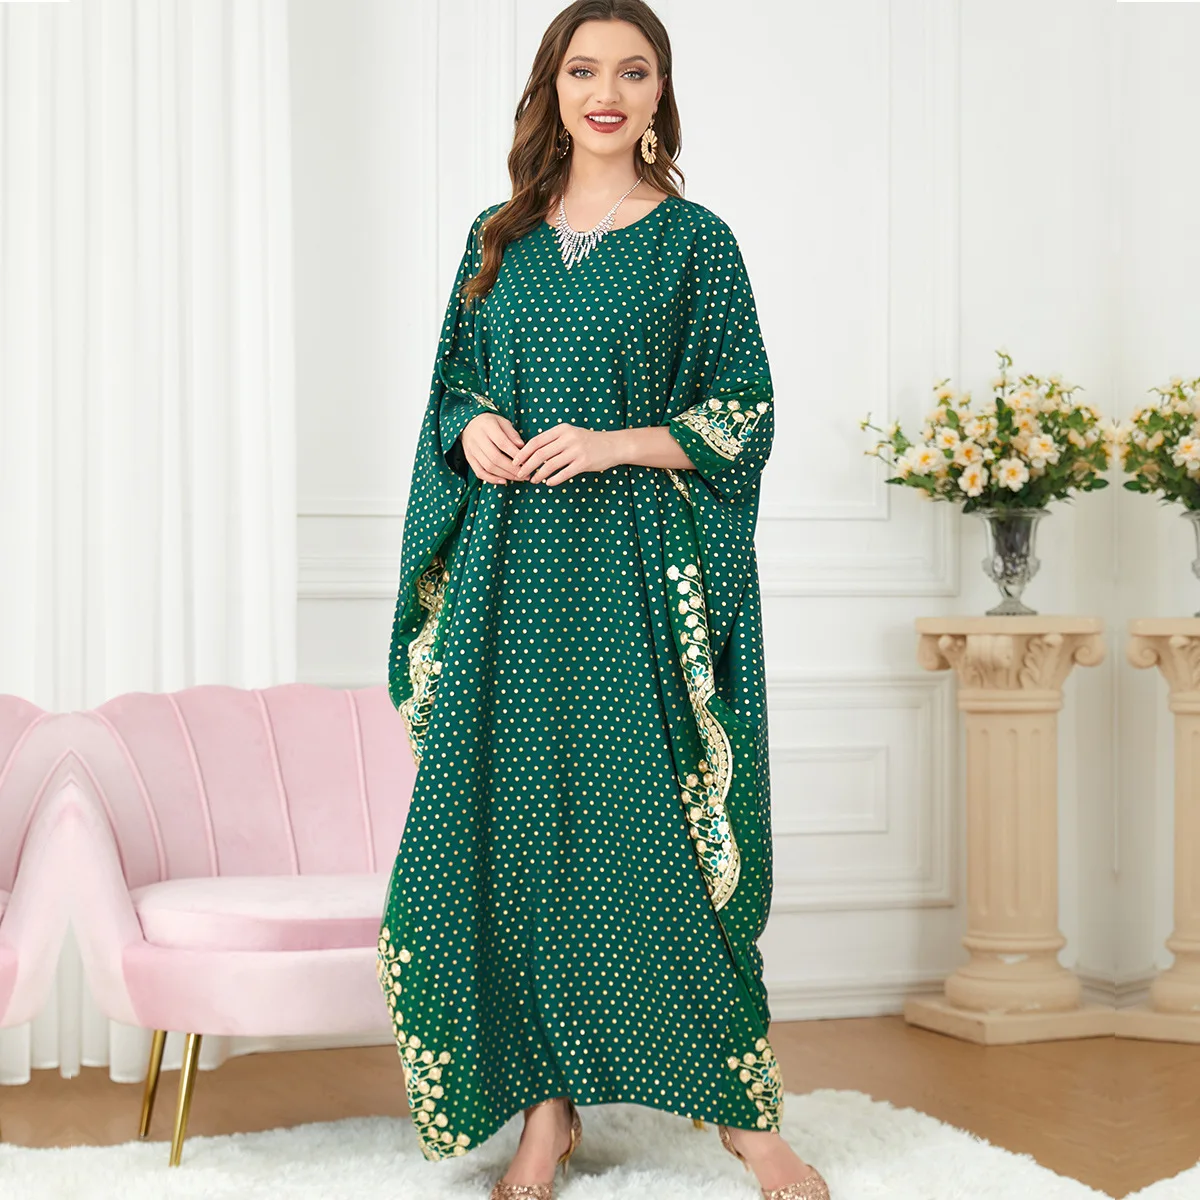 

New Green Polka Dot Bat Sleeve Muslim Dresses Abayas for Women Printed Dress Maxi Dress Women's Casual Long Sleeve O-neck Robes